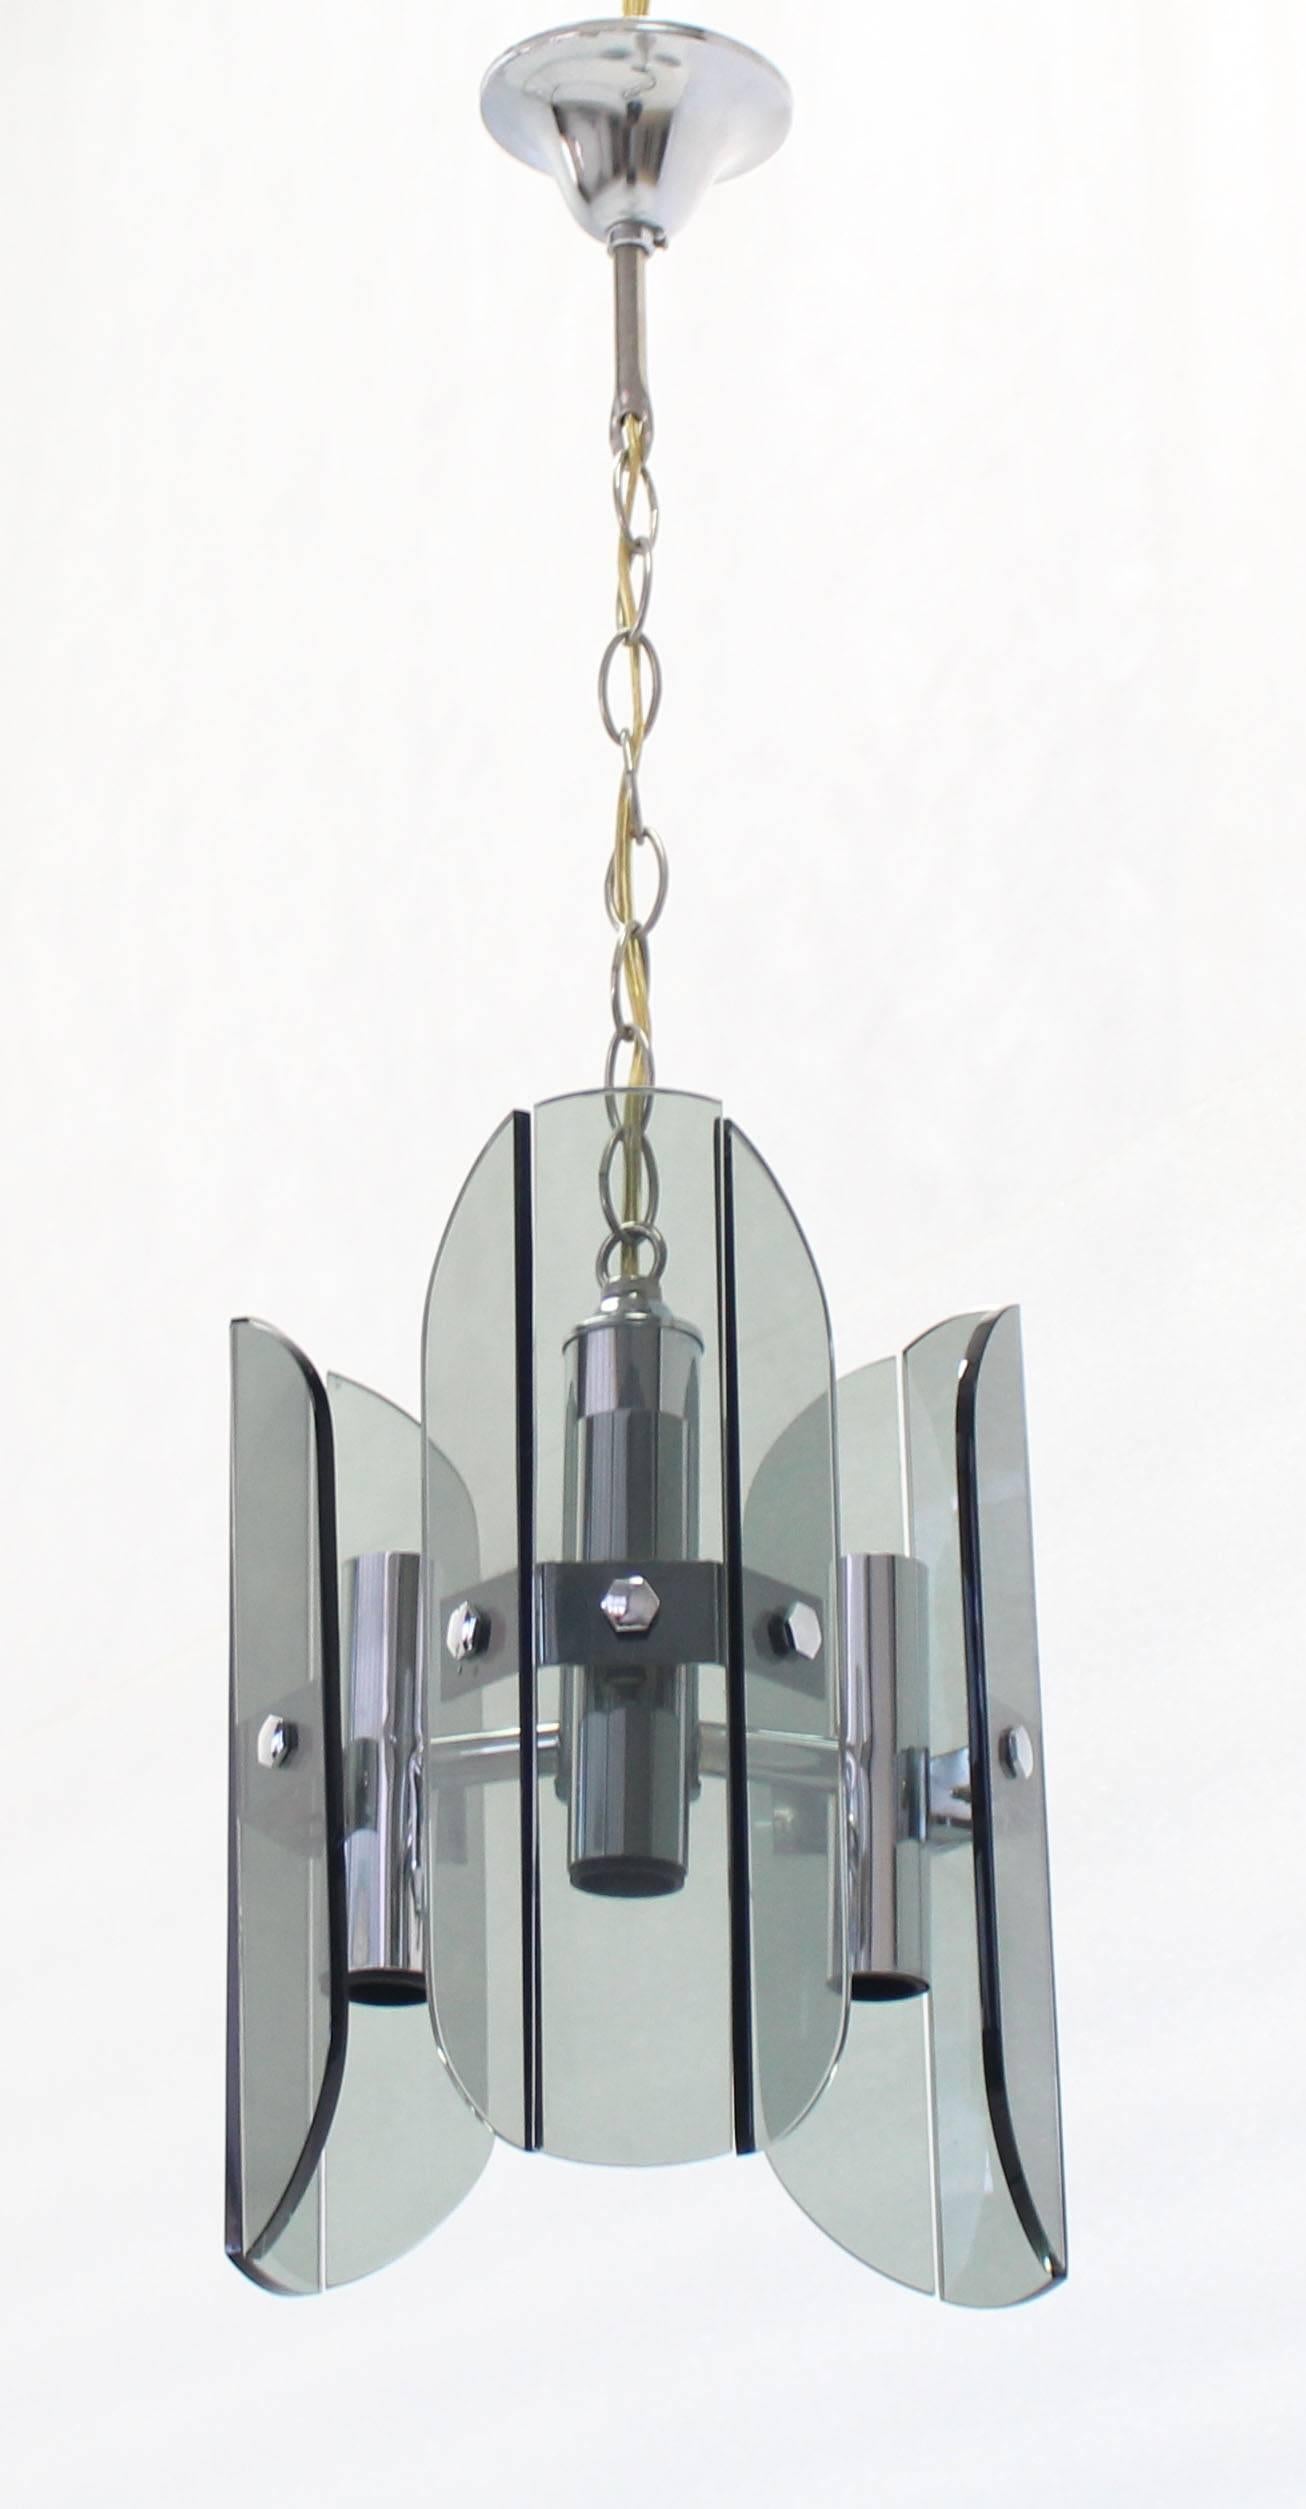 Midcentury Italian modern smoked glass football shape pendant chandelier light fixture. The actual pendant height is 12